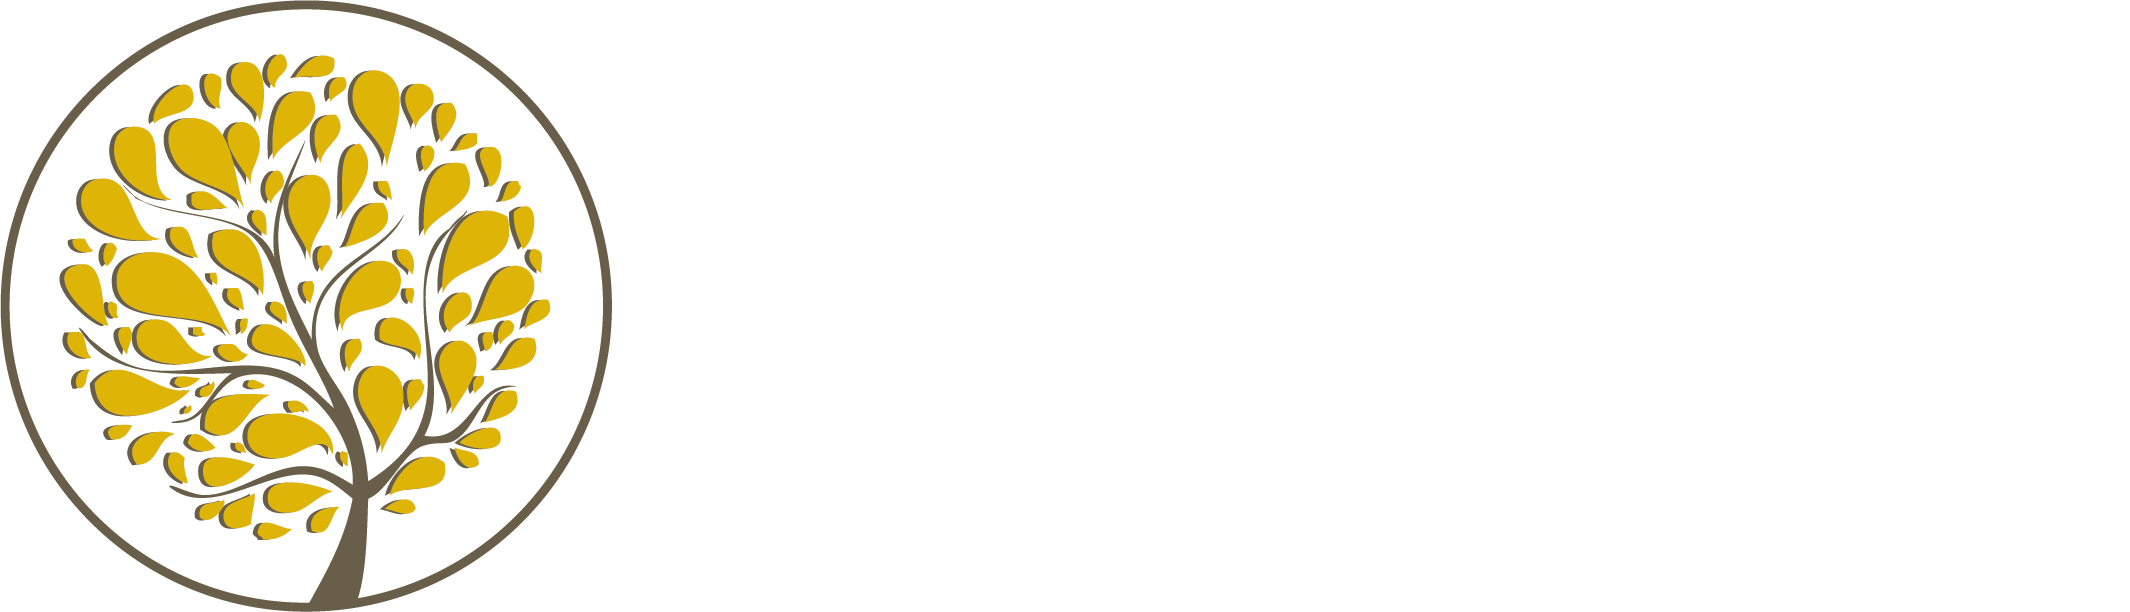 Wesleyan - Wesleyan Health & Rehabilitation Center